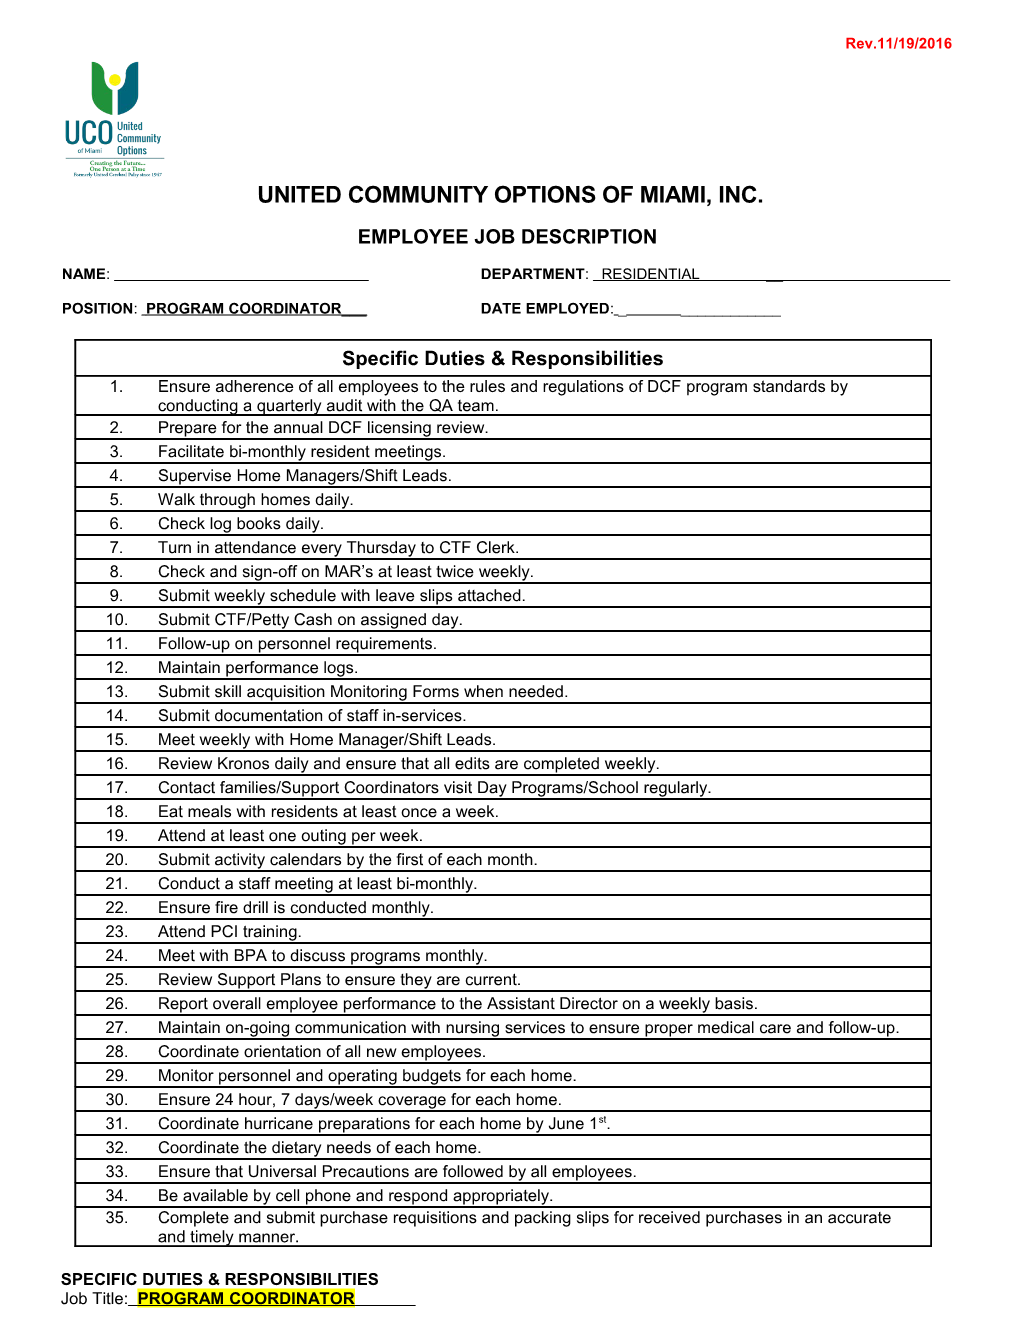 United Community Options of Miami, Inc